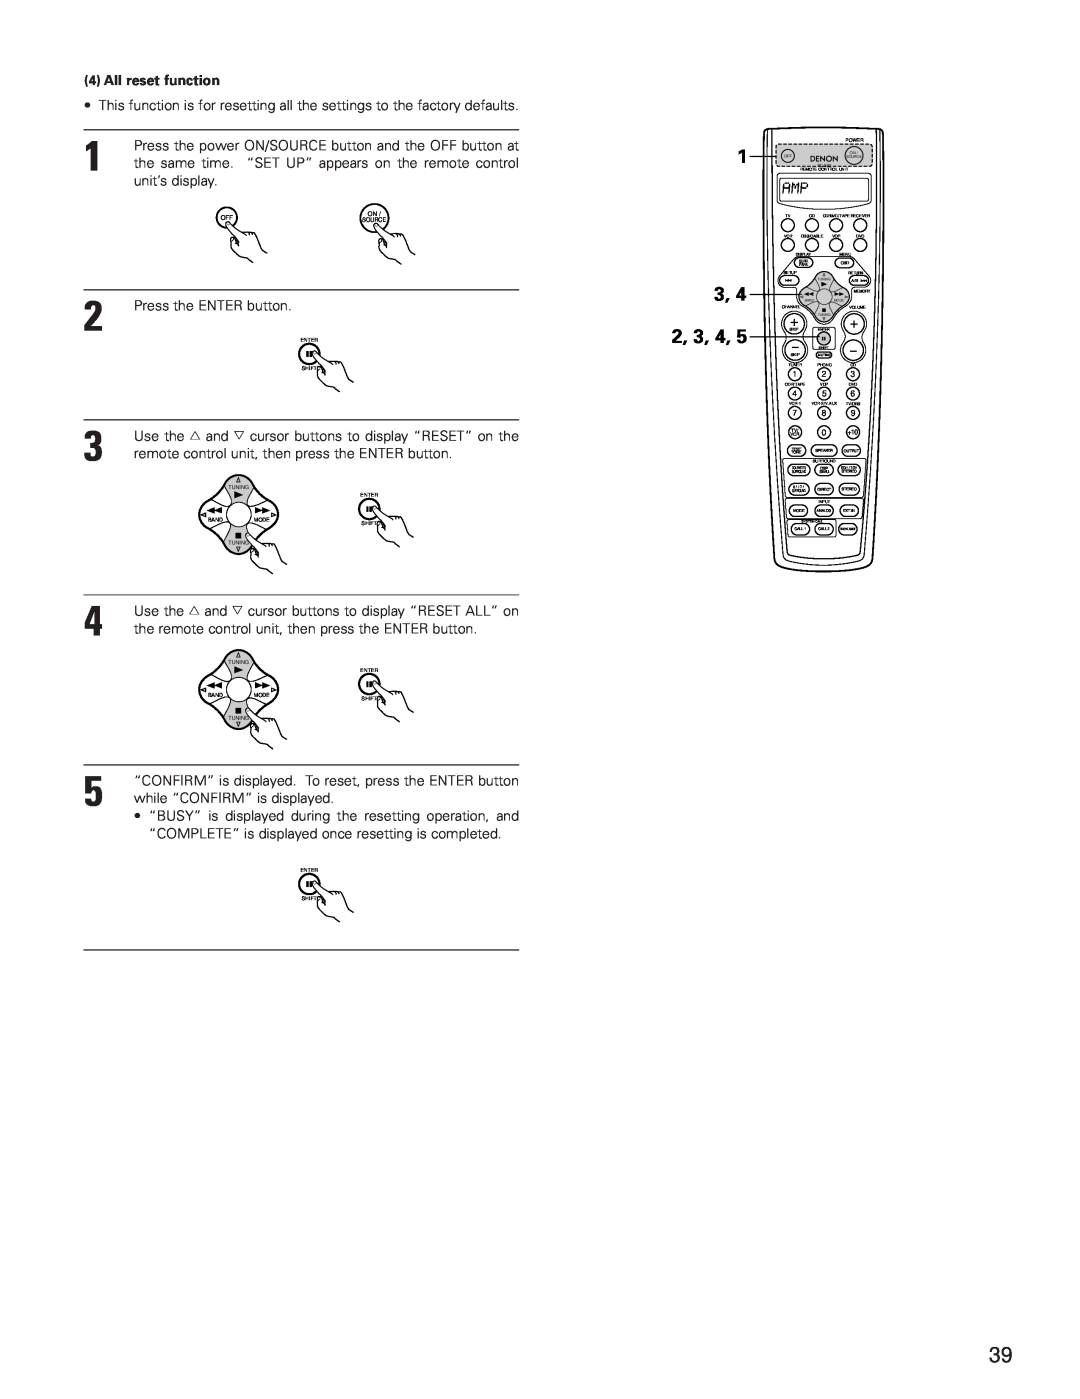 Denon AVR-3801 manual 1 3, 4, All reset function 